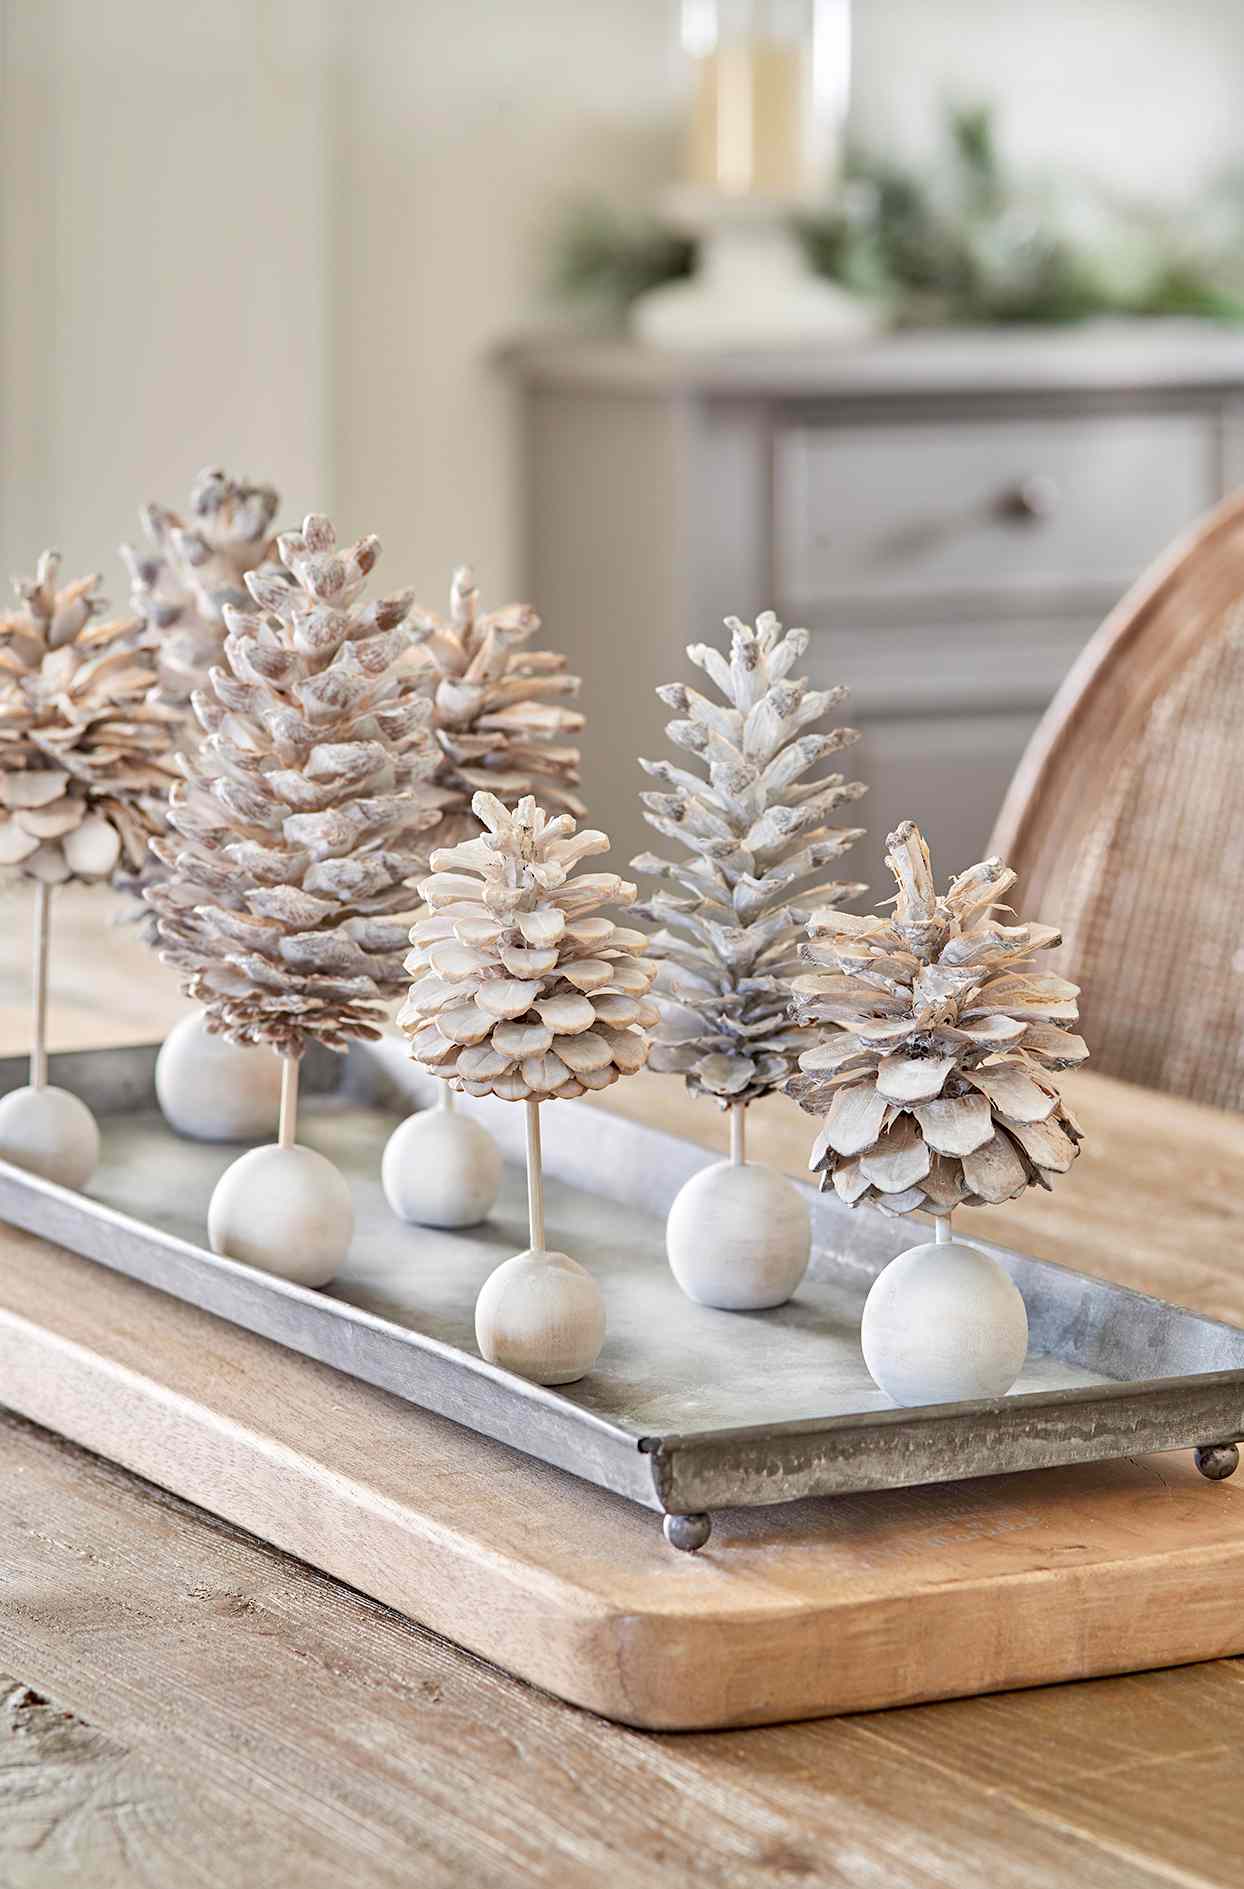 Mini trees made of pinecones